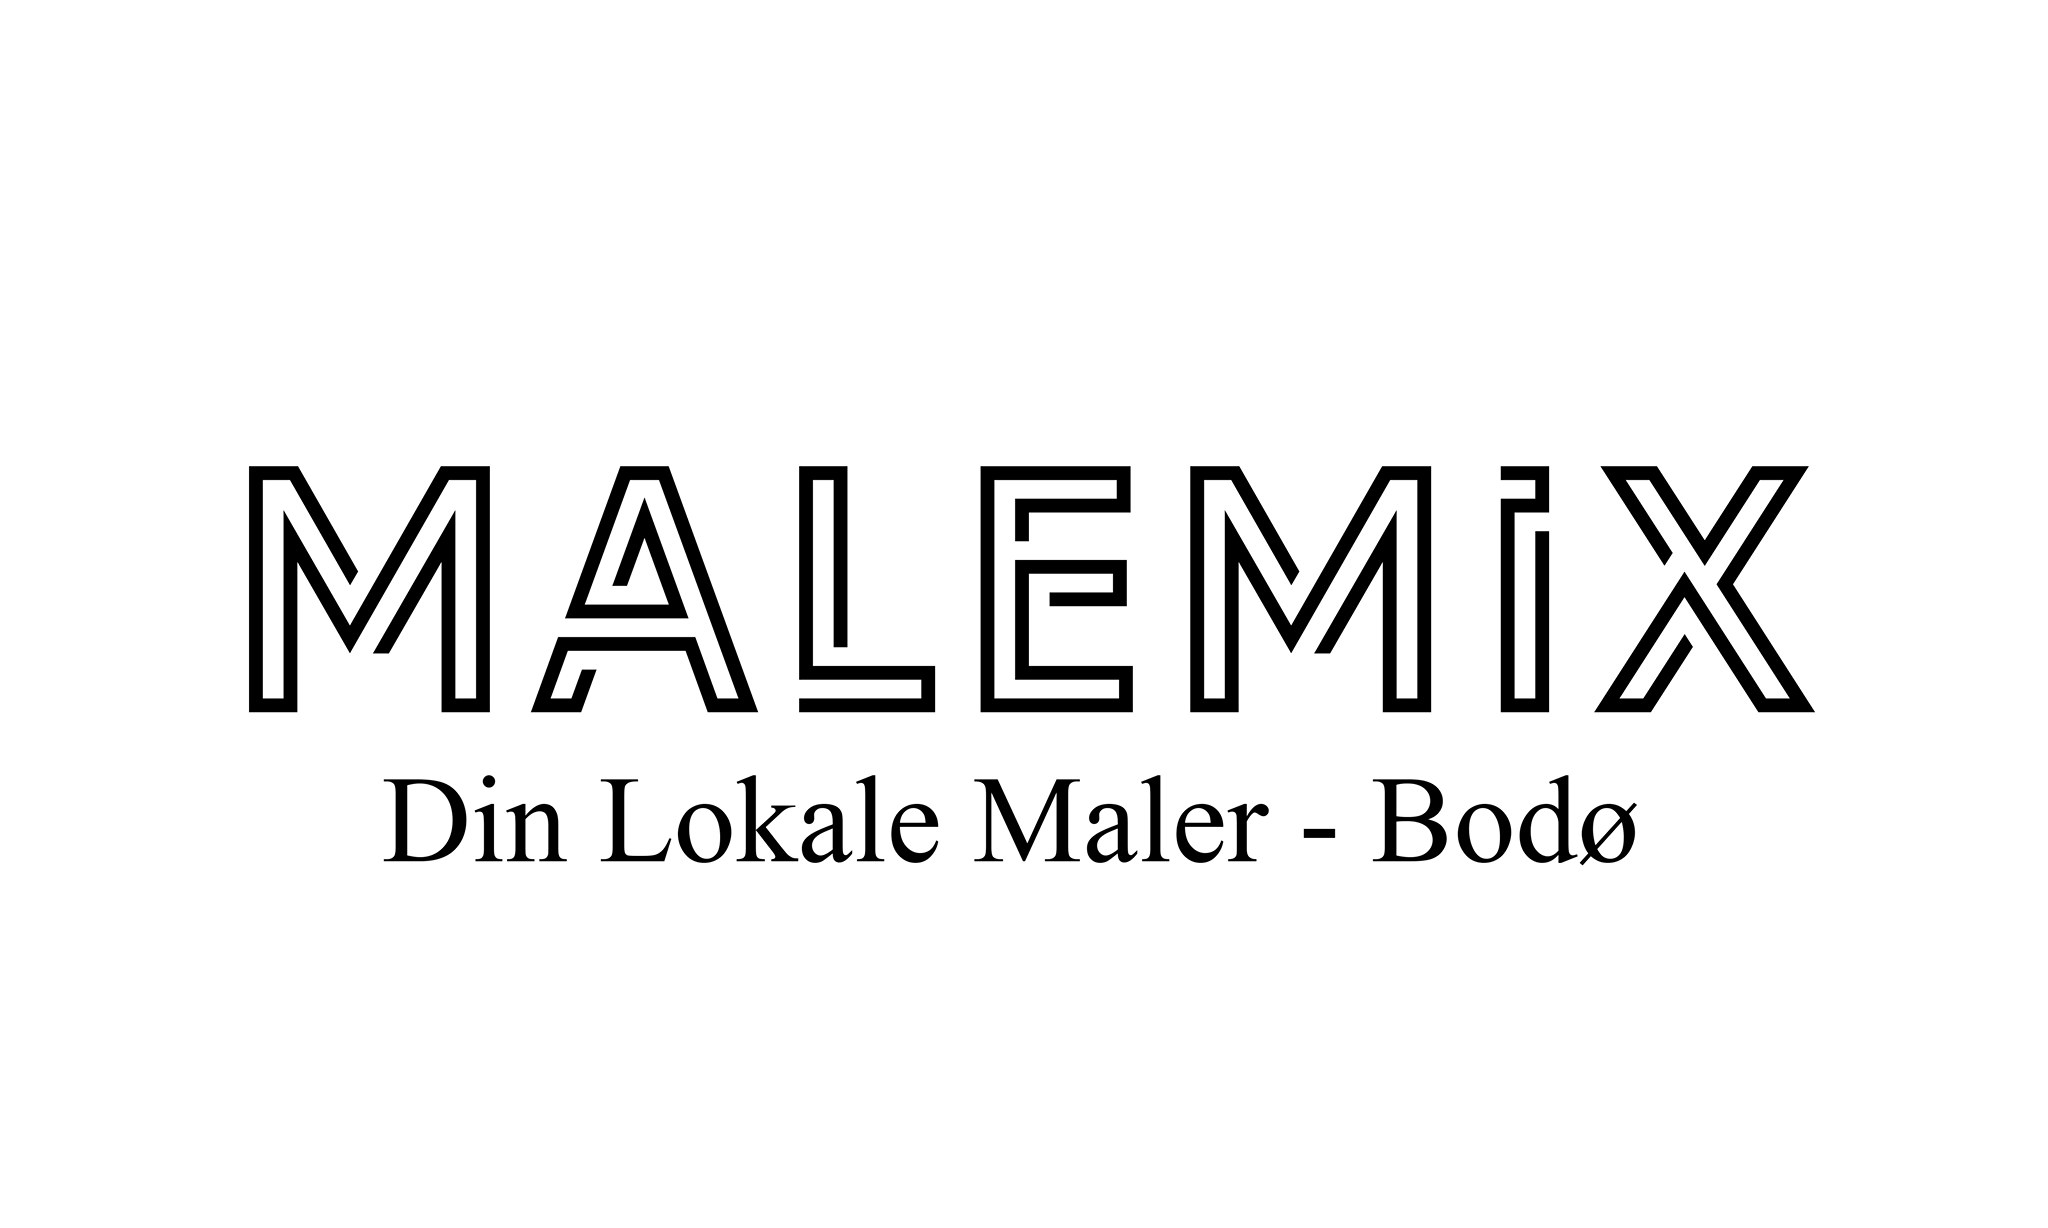 Malemix logo